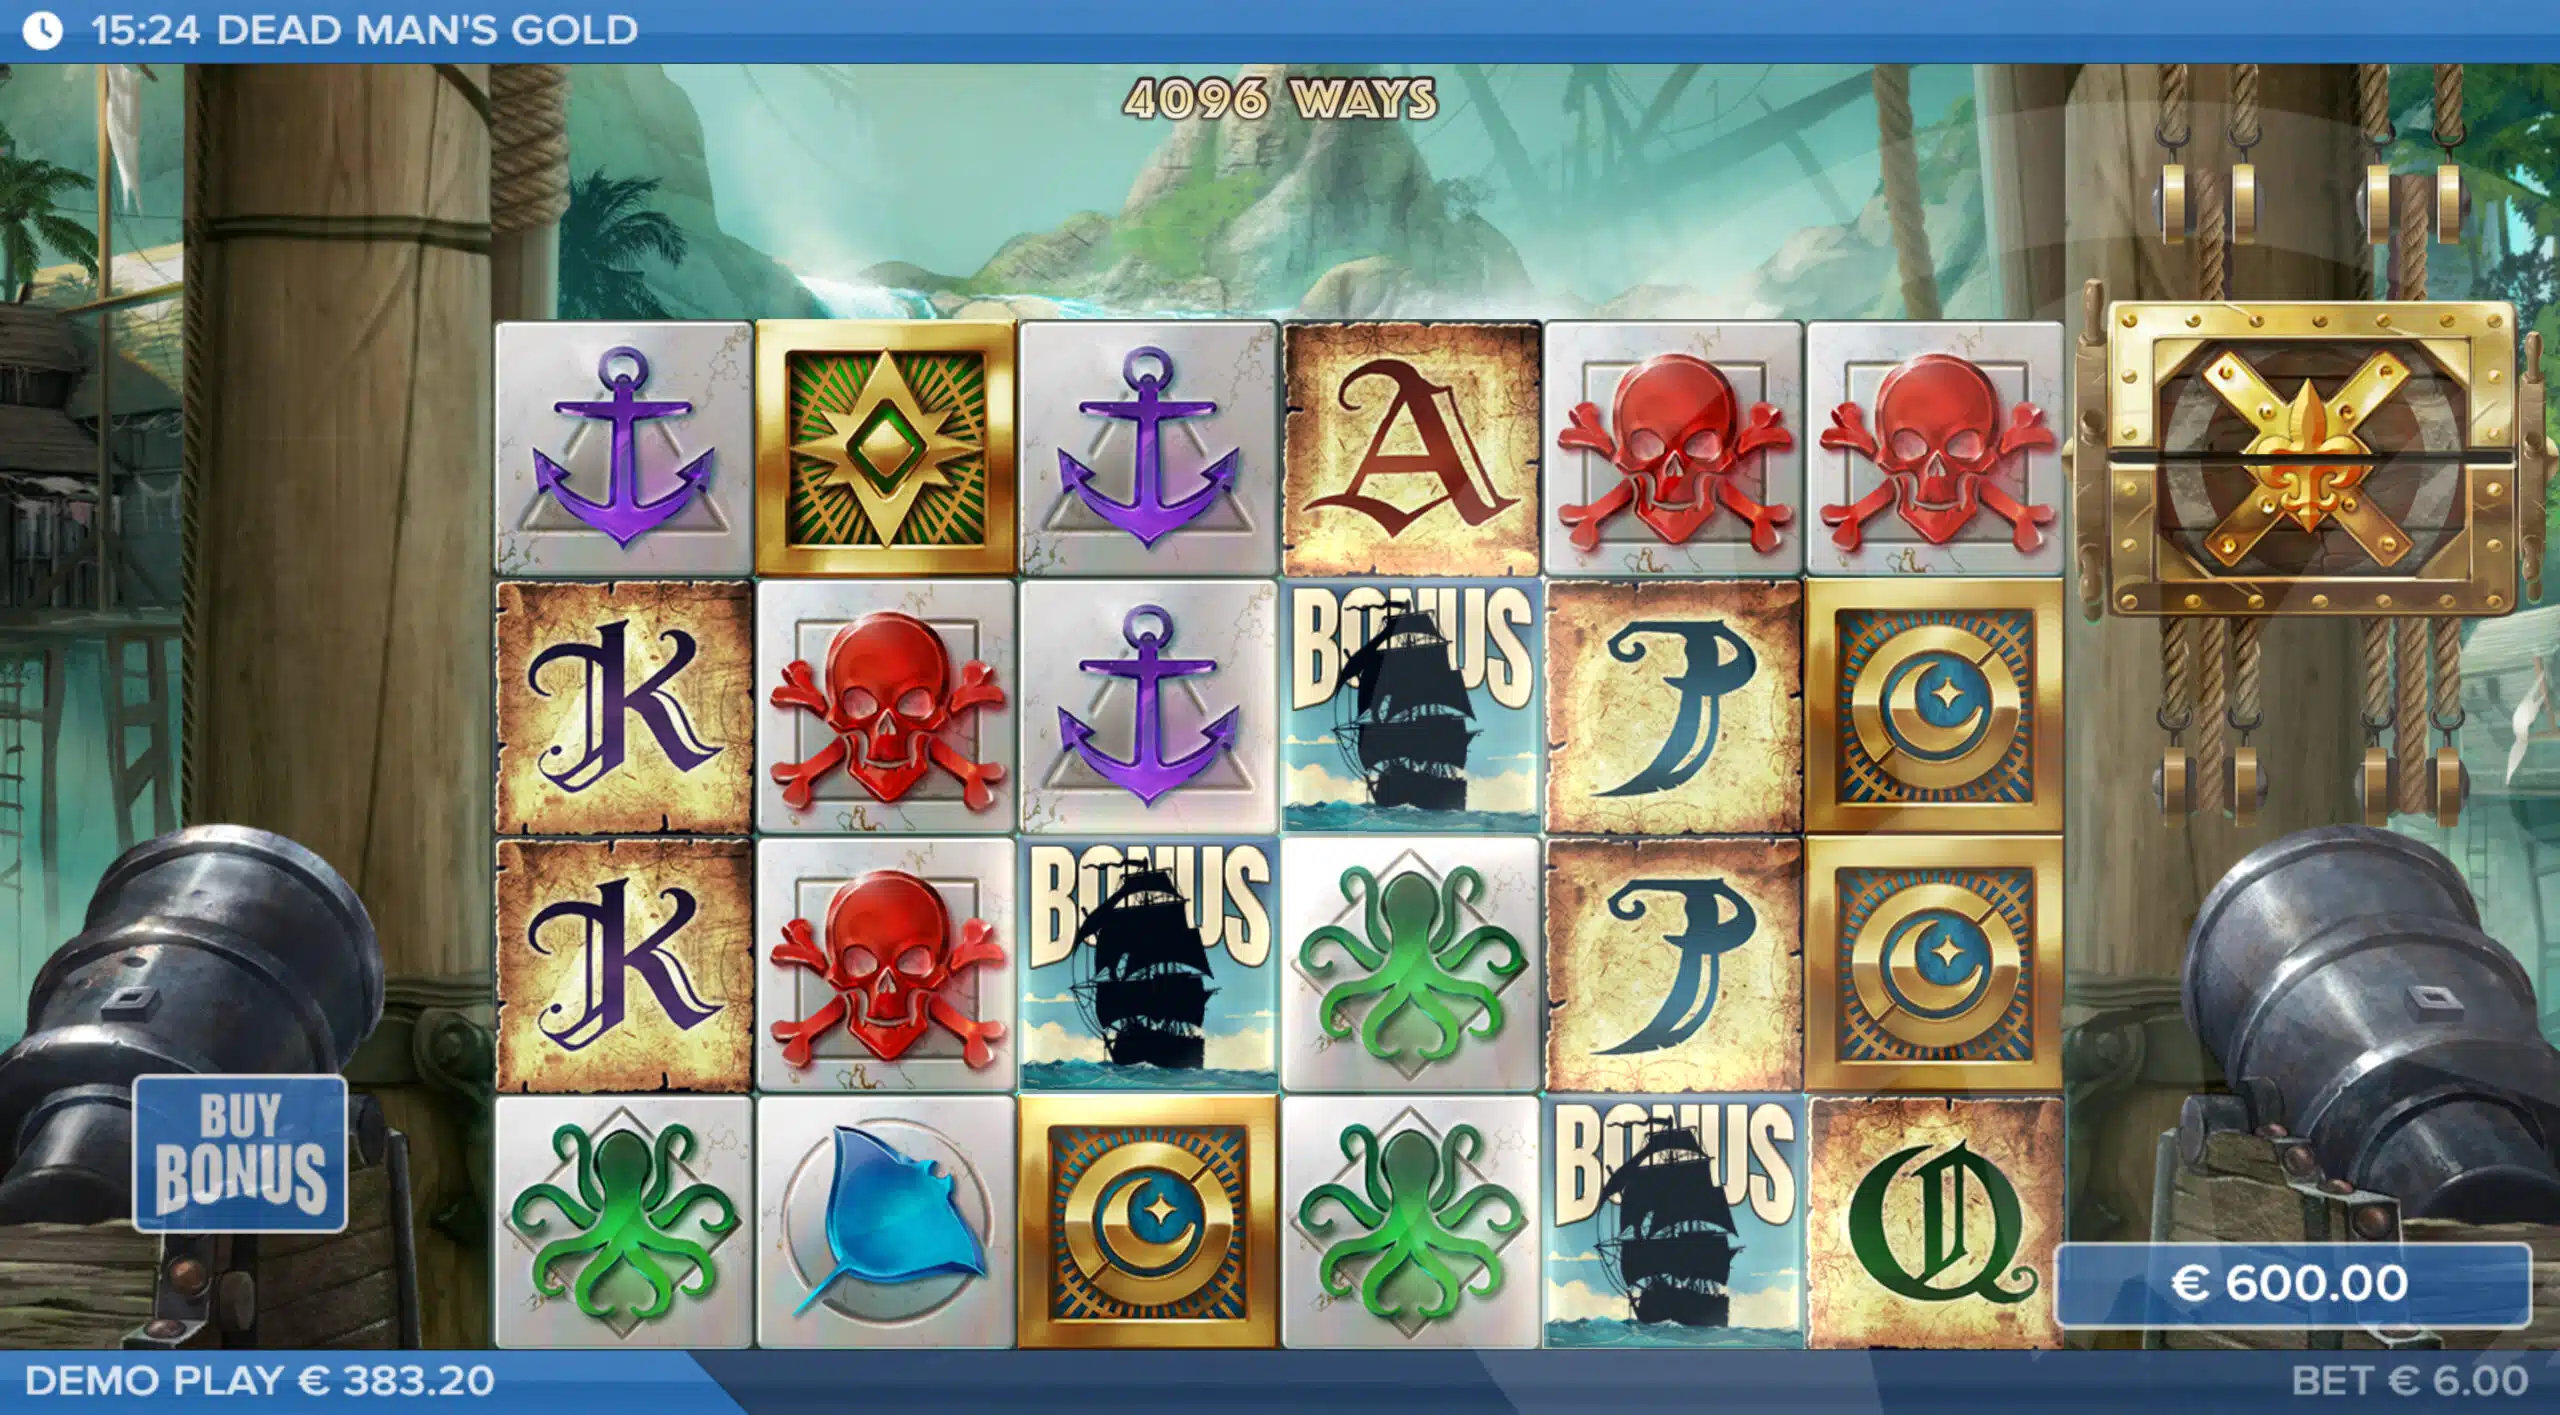 Land 3 or More Bonus Symbols to Trigger the Bonus Game, Awarding Free Drops